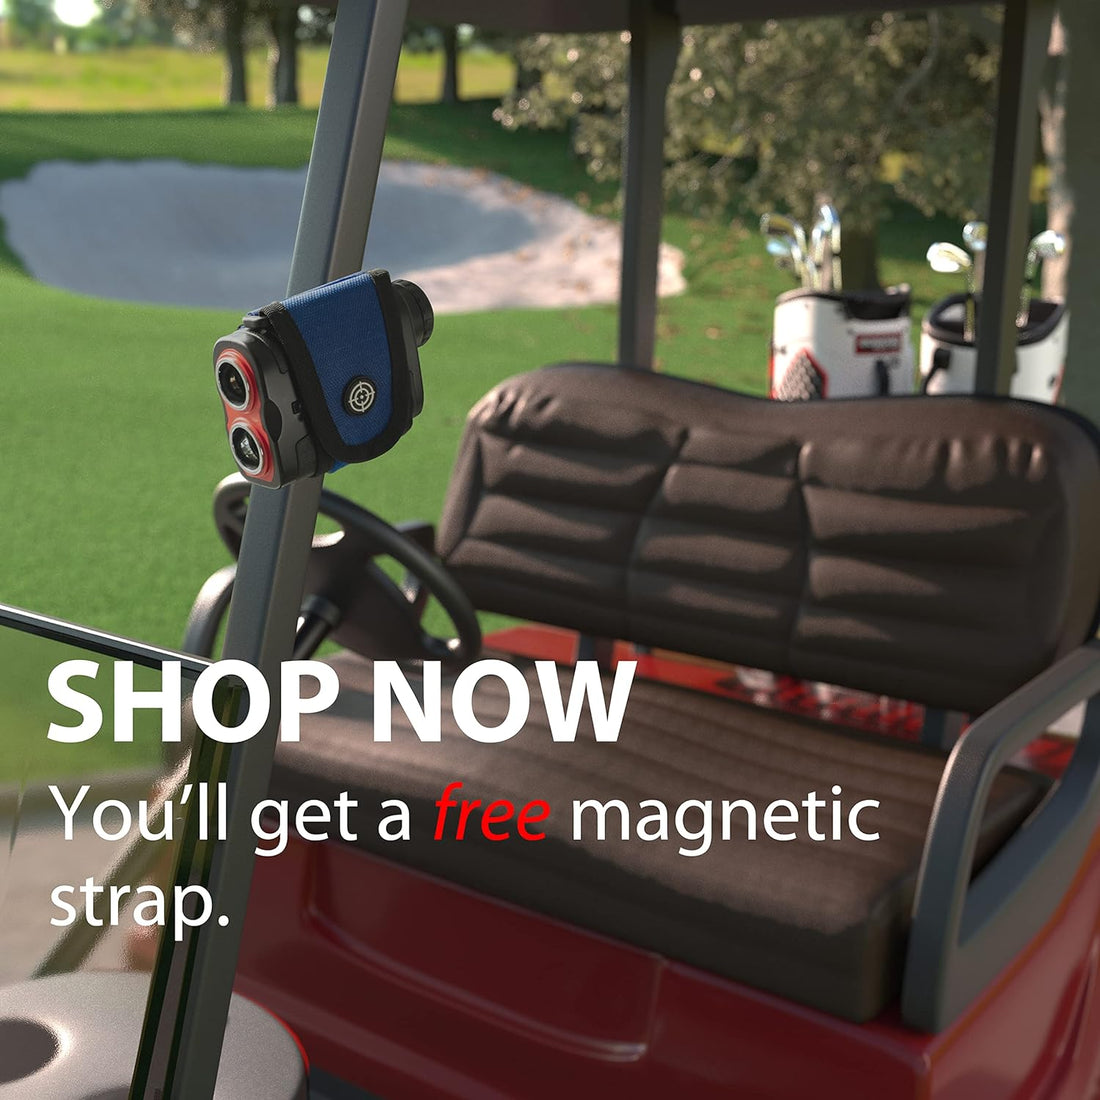 AILEMON 6X Golf Range Finder, 1000/1200 Yard Laser RangeFinder with Slope Switch, Scan, Flagpole Lock, and Speed Function, Tournament Legal Golf Rangefinder